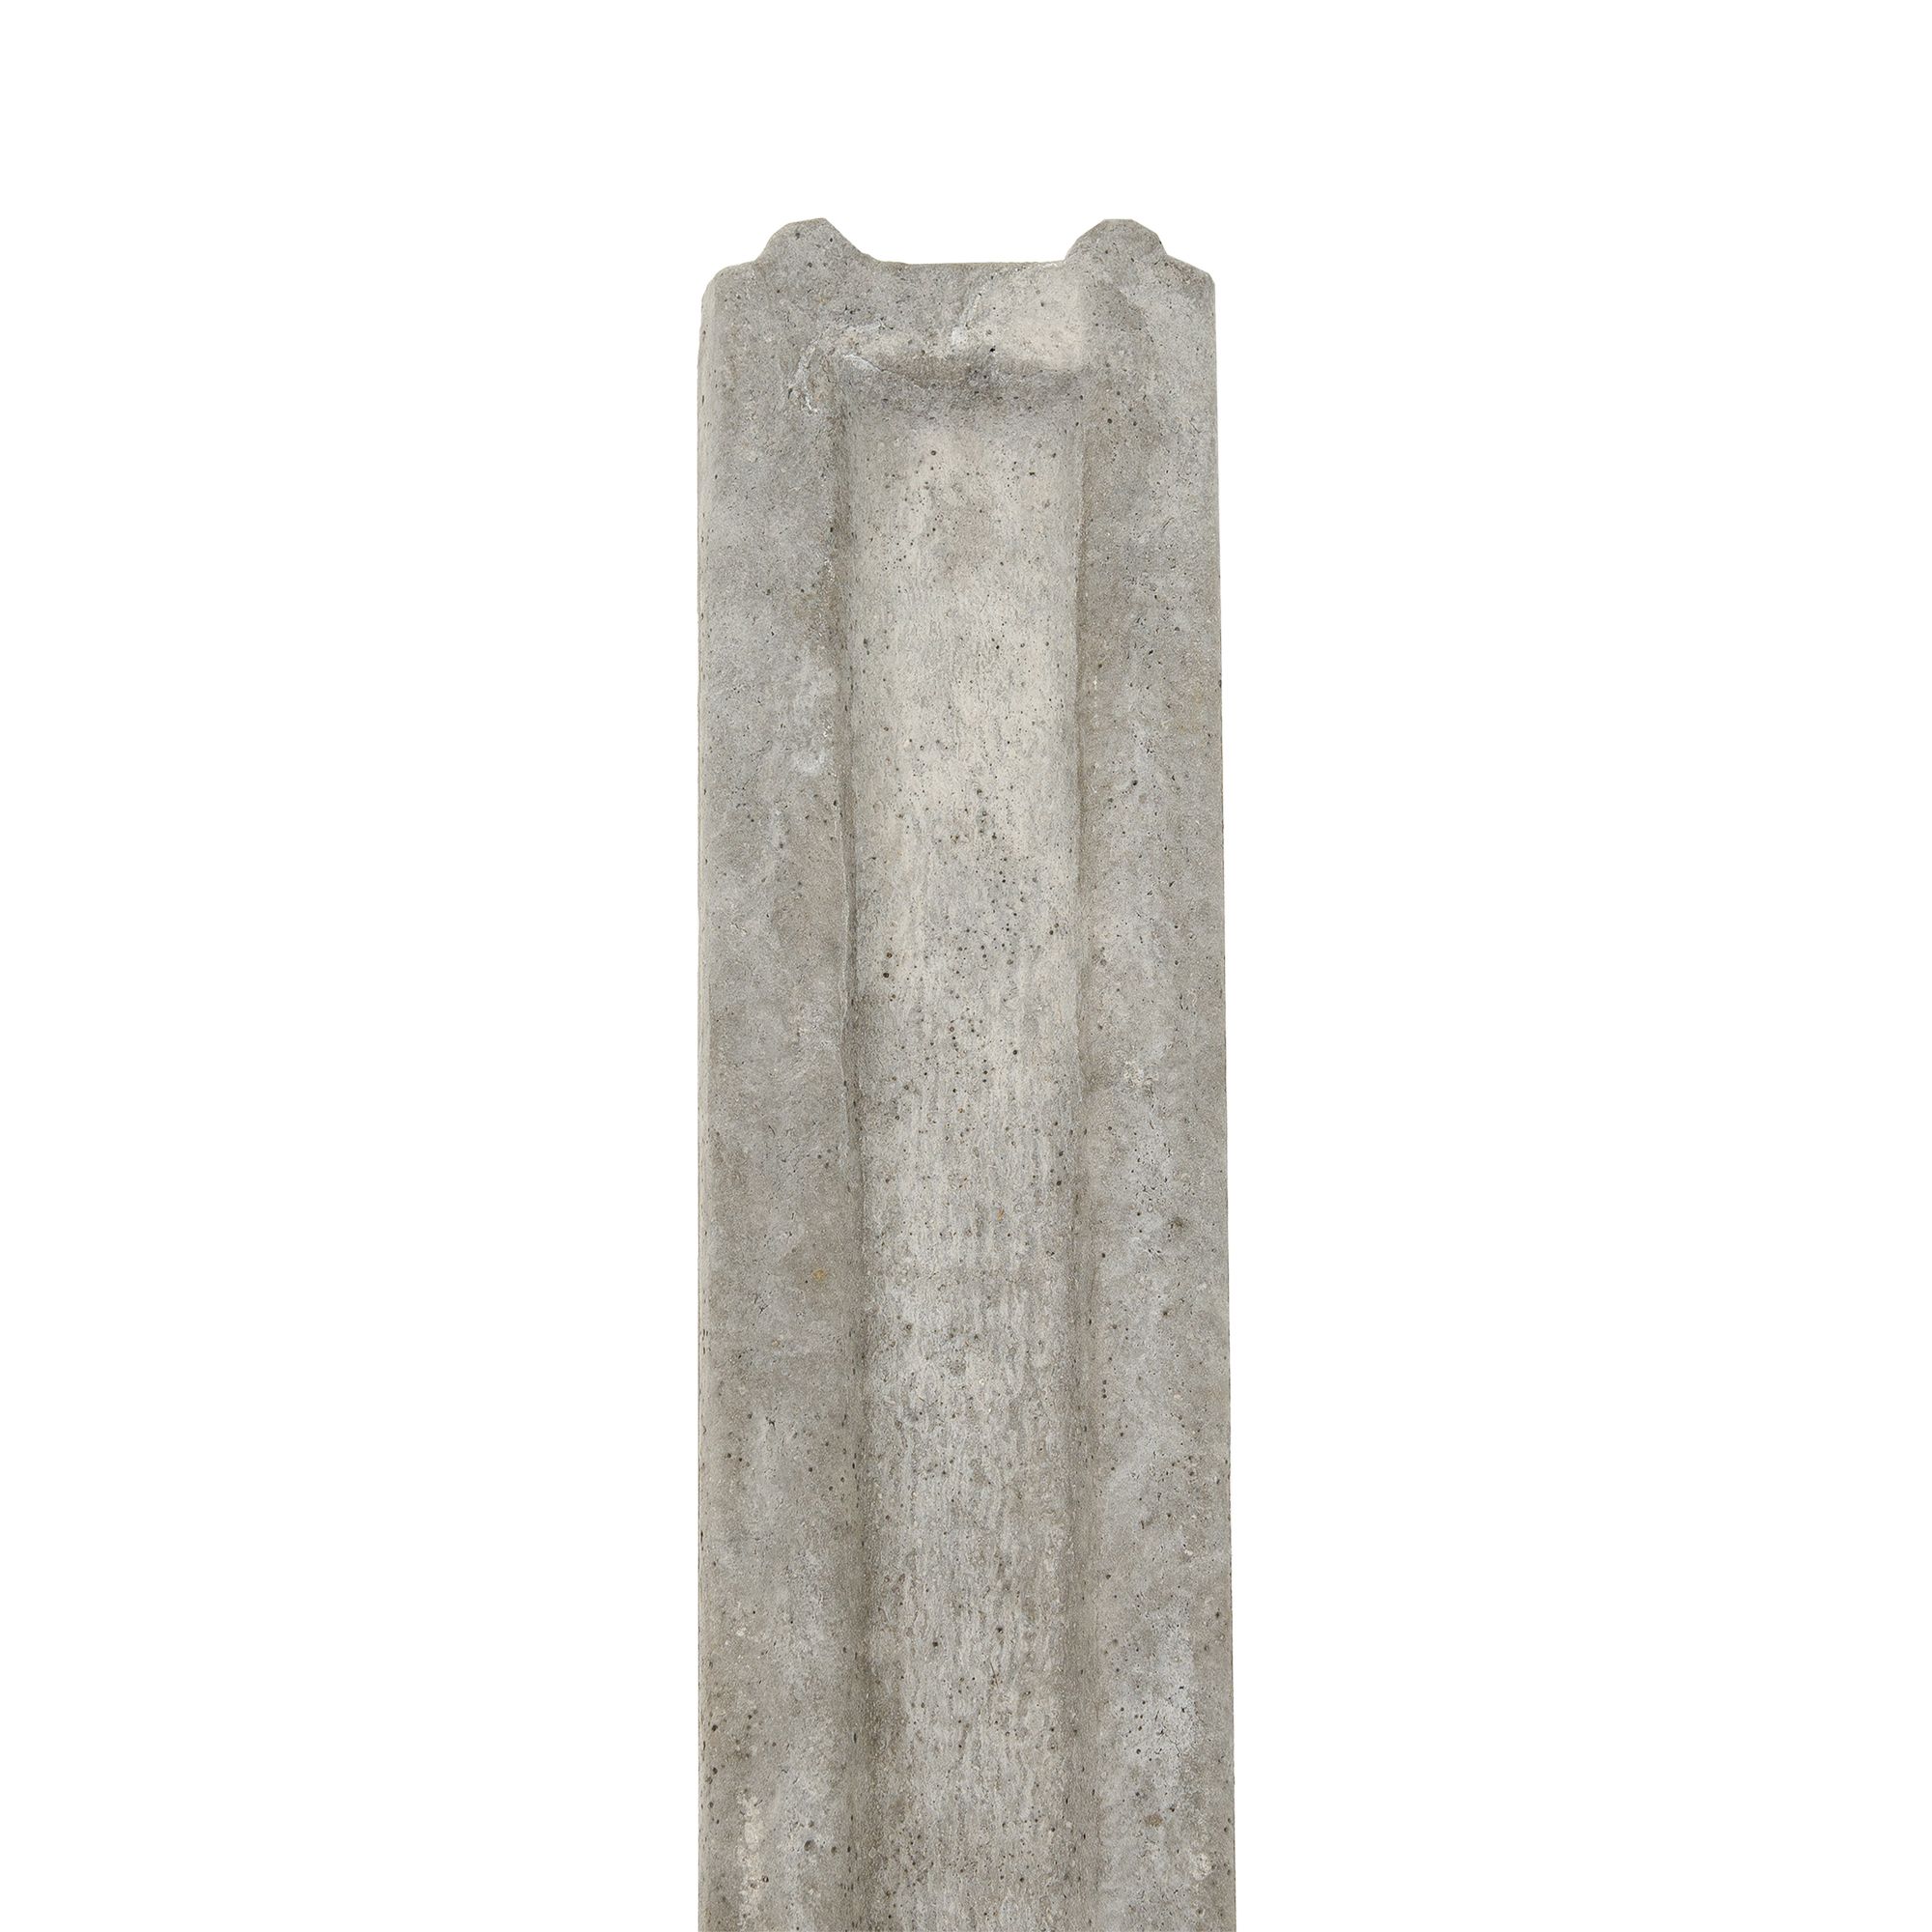 Concrete Gravel board (L)1.83m (W)150mm (T)50mm, Pack of 5